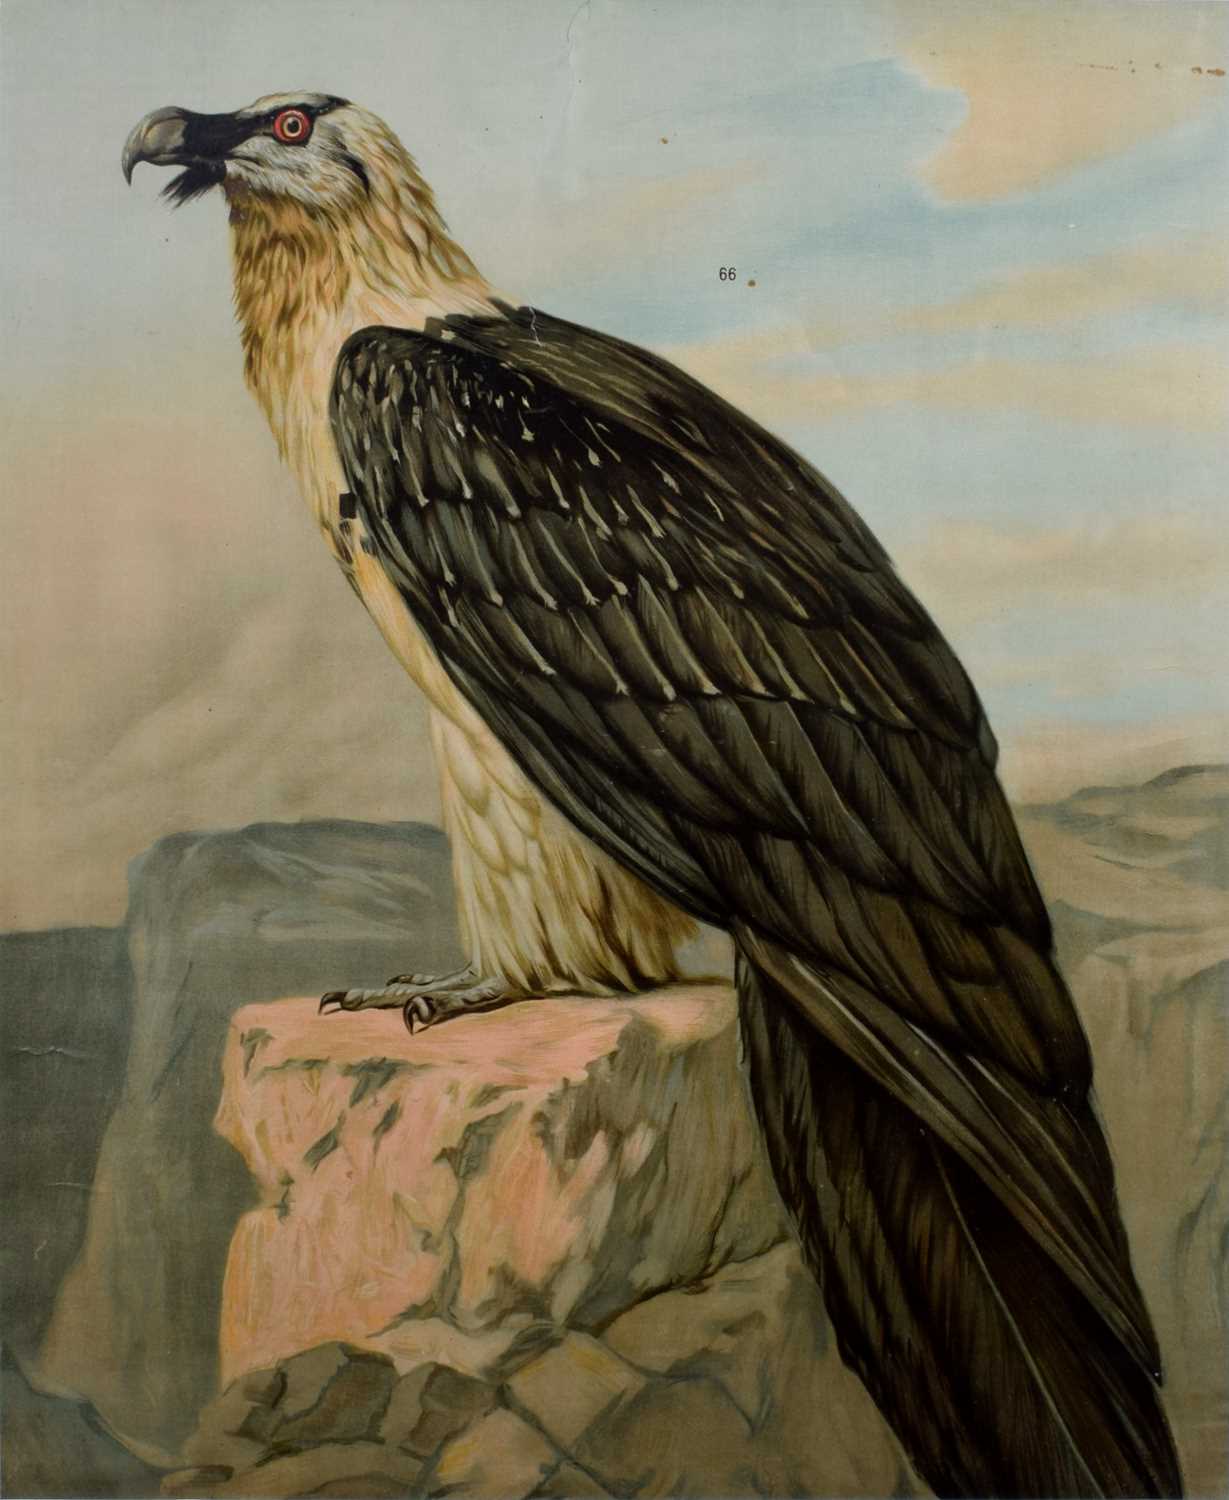 Lot 76 - Large Print of a Bird of Prey